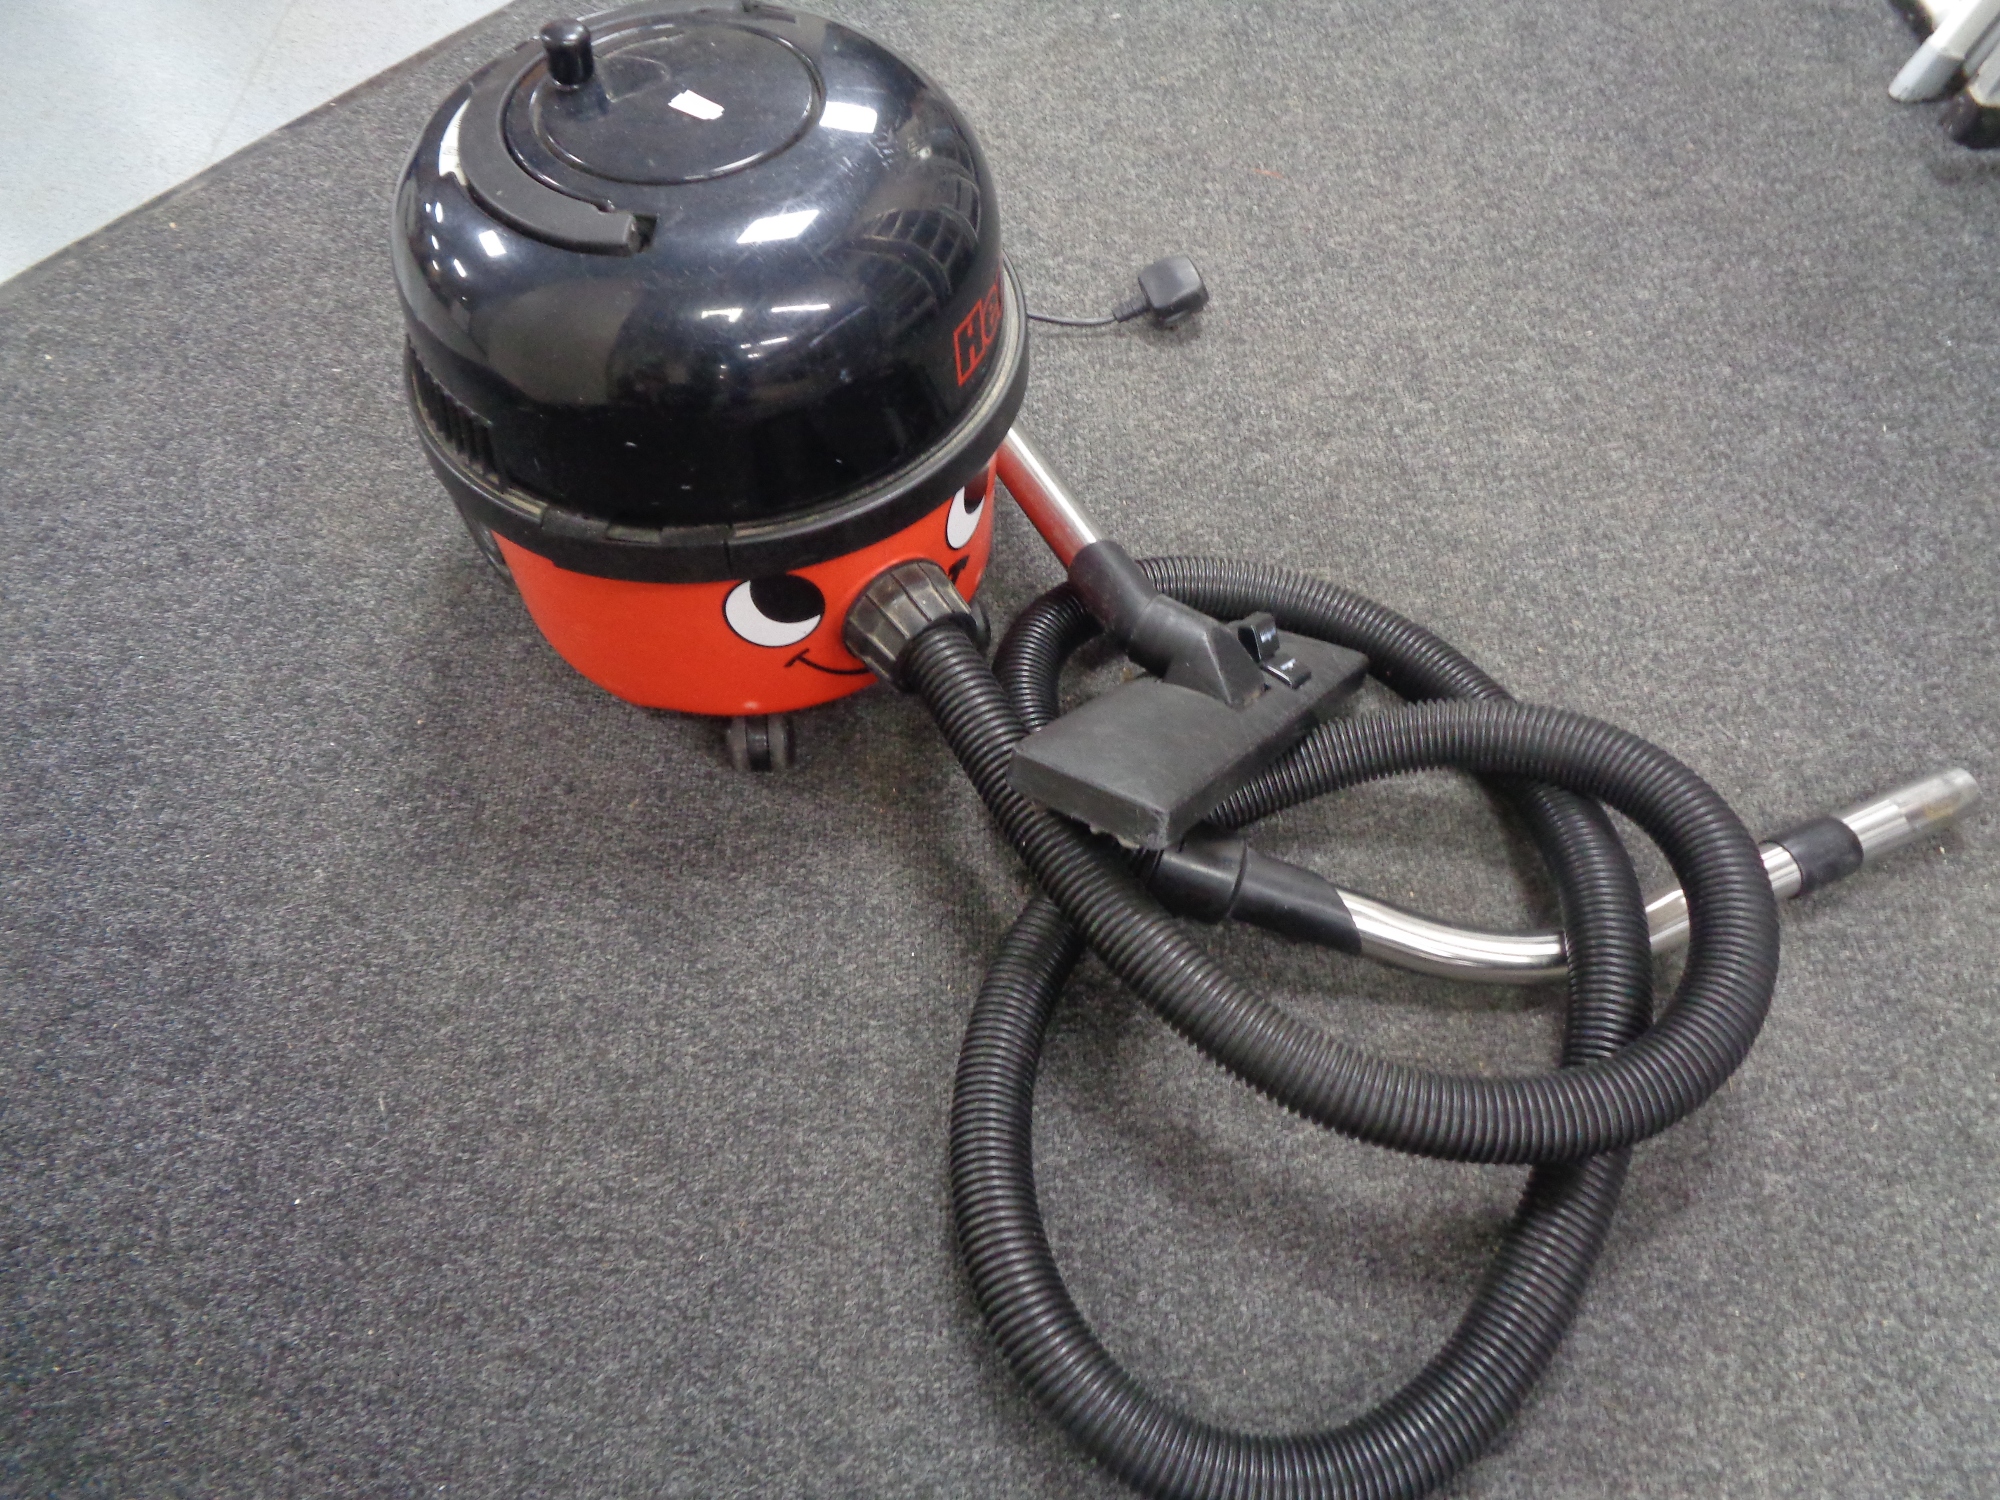 A Henry vacuum